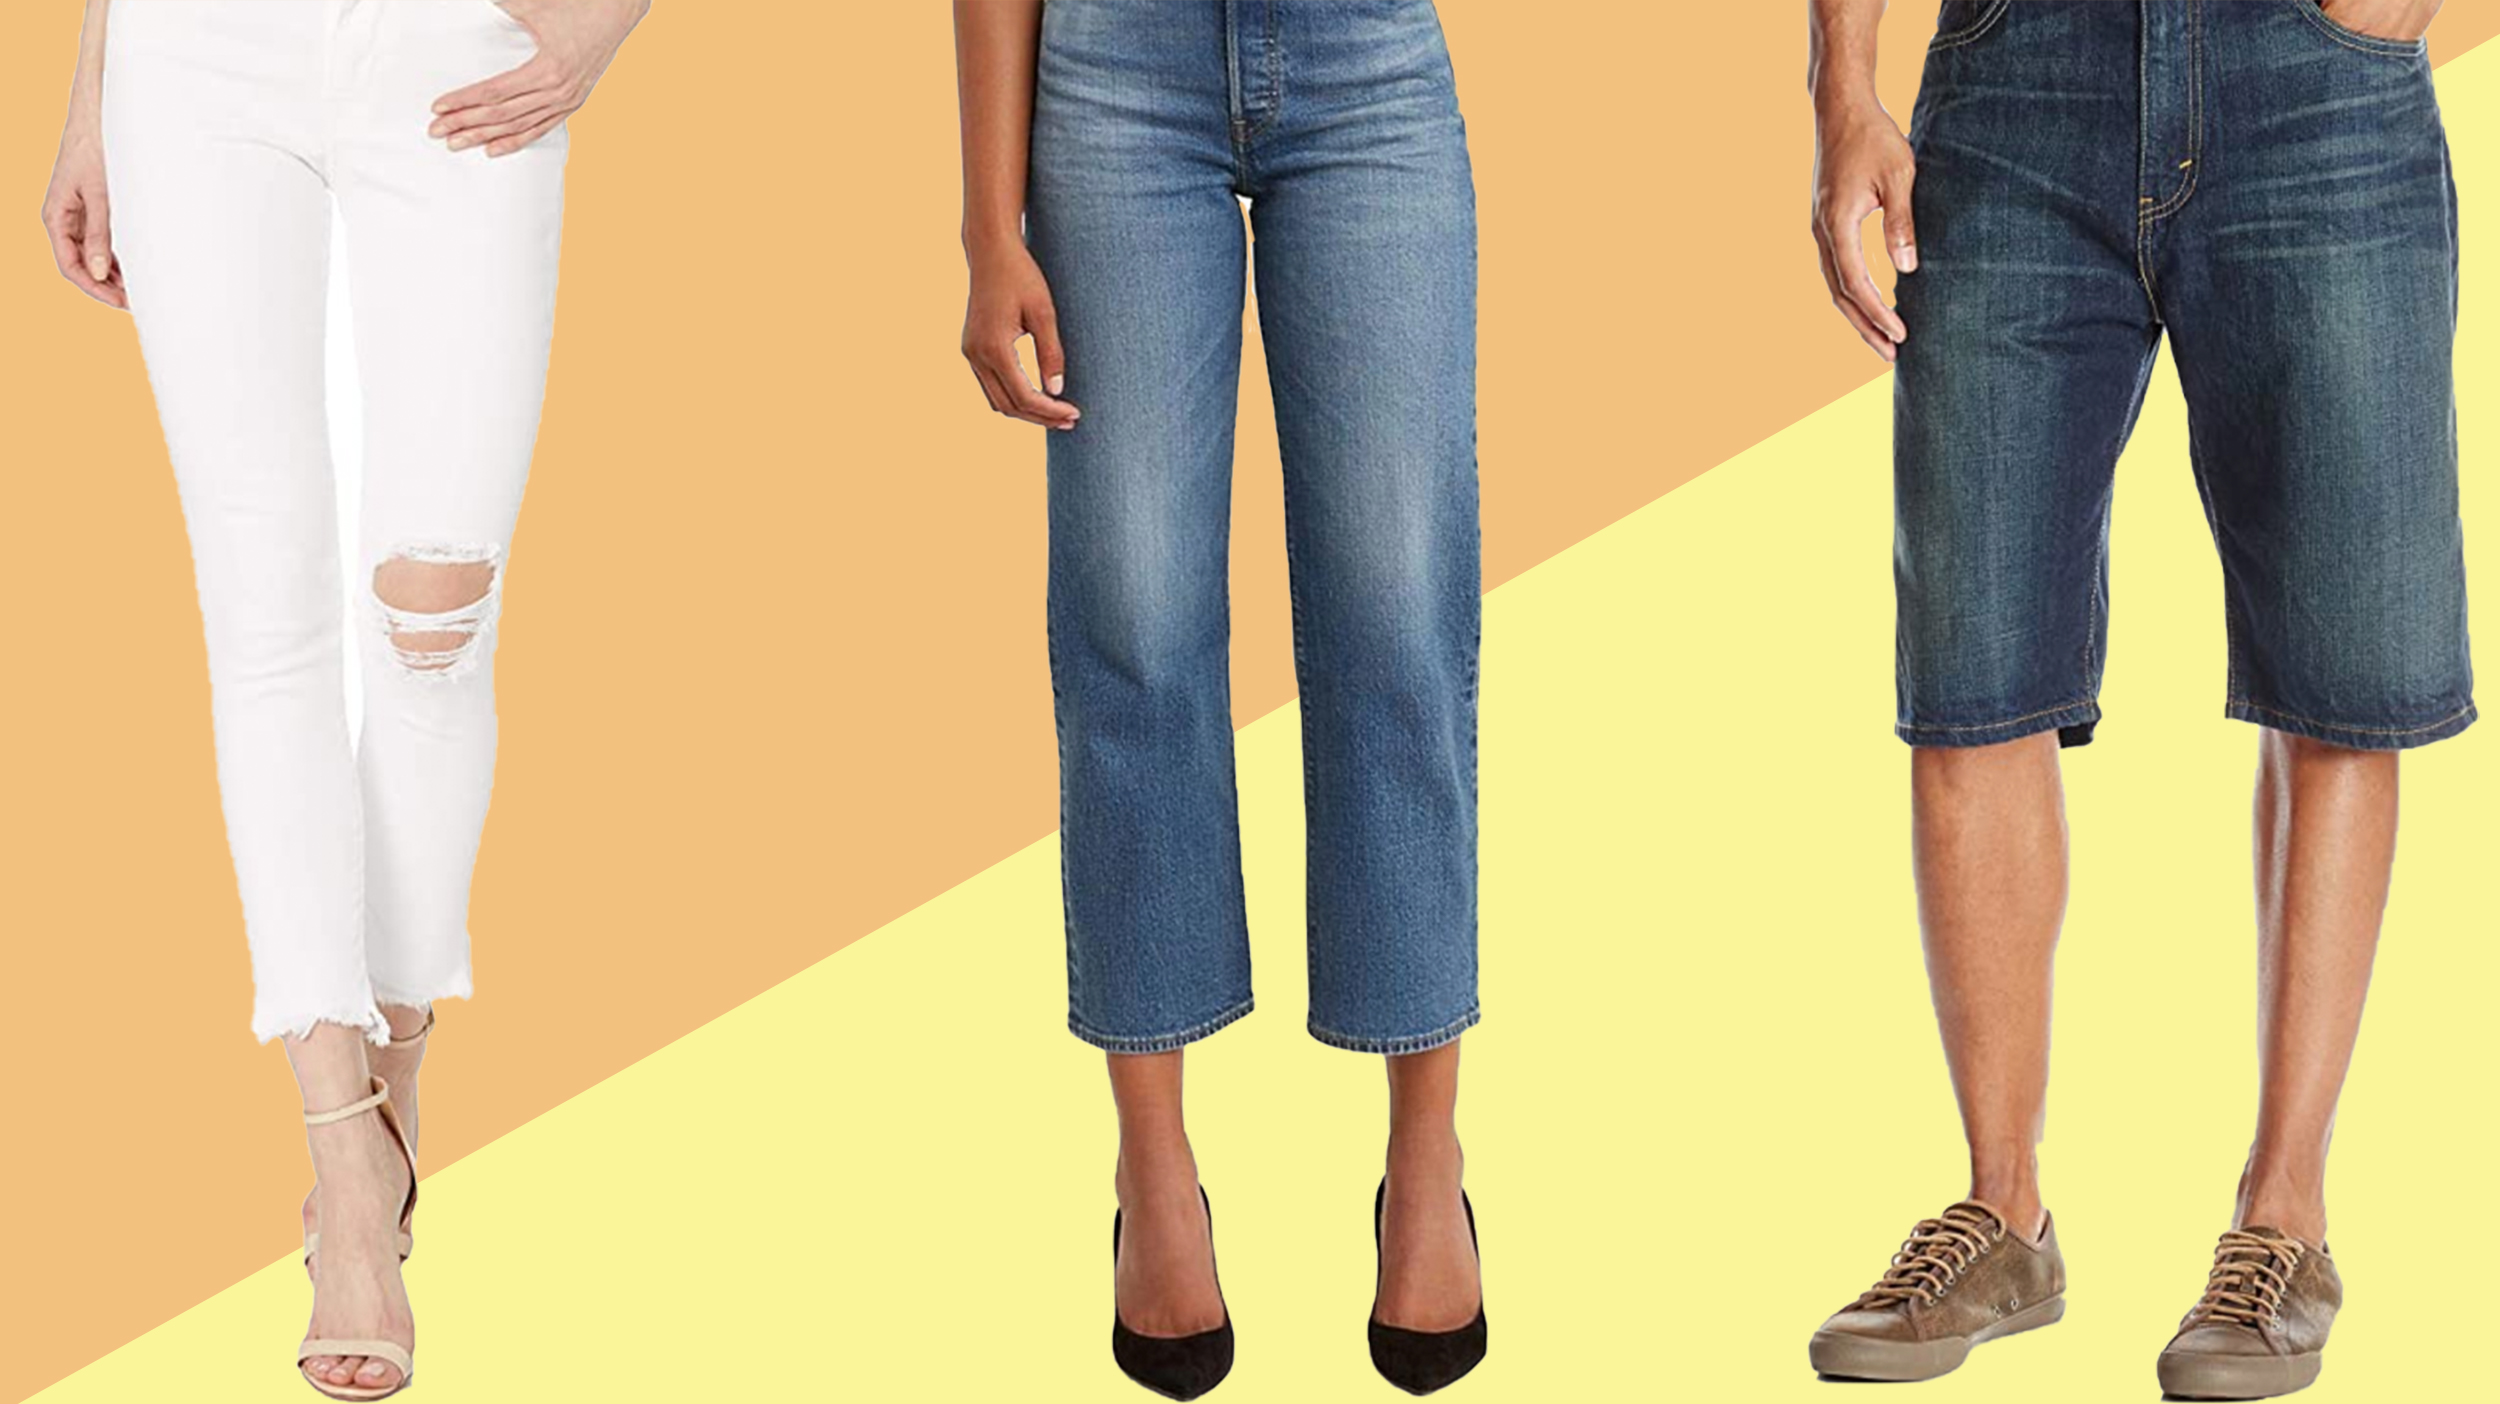 denim jeans on sale